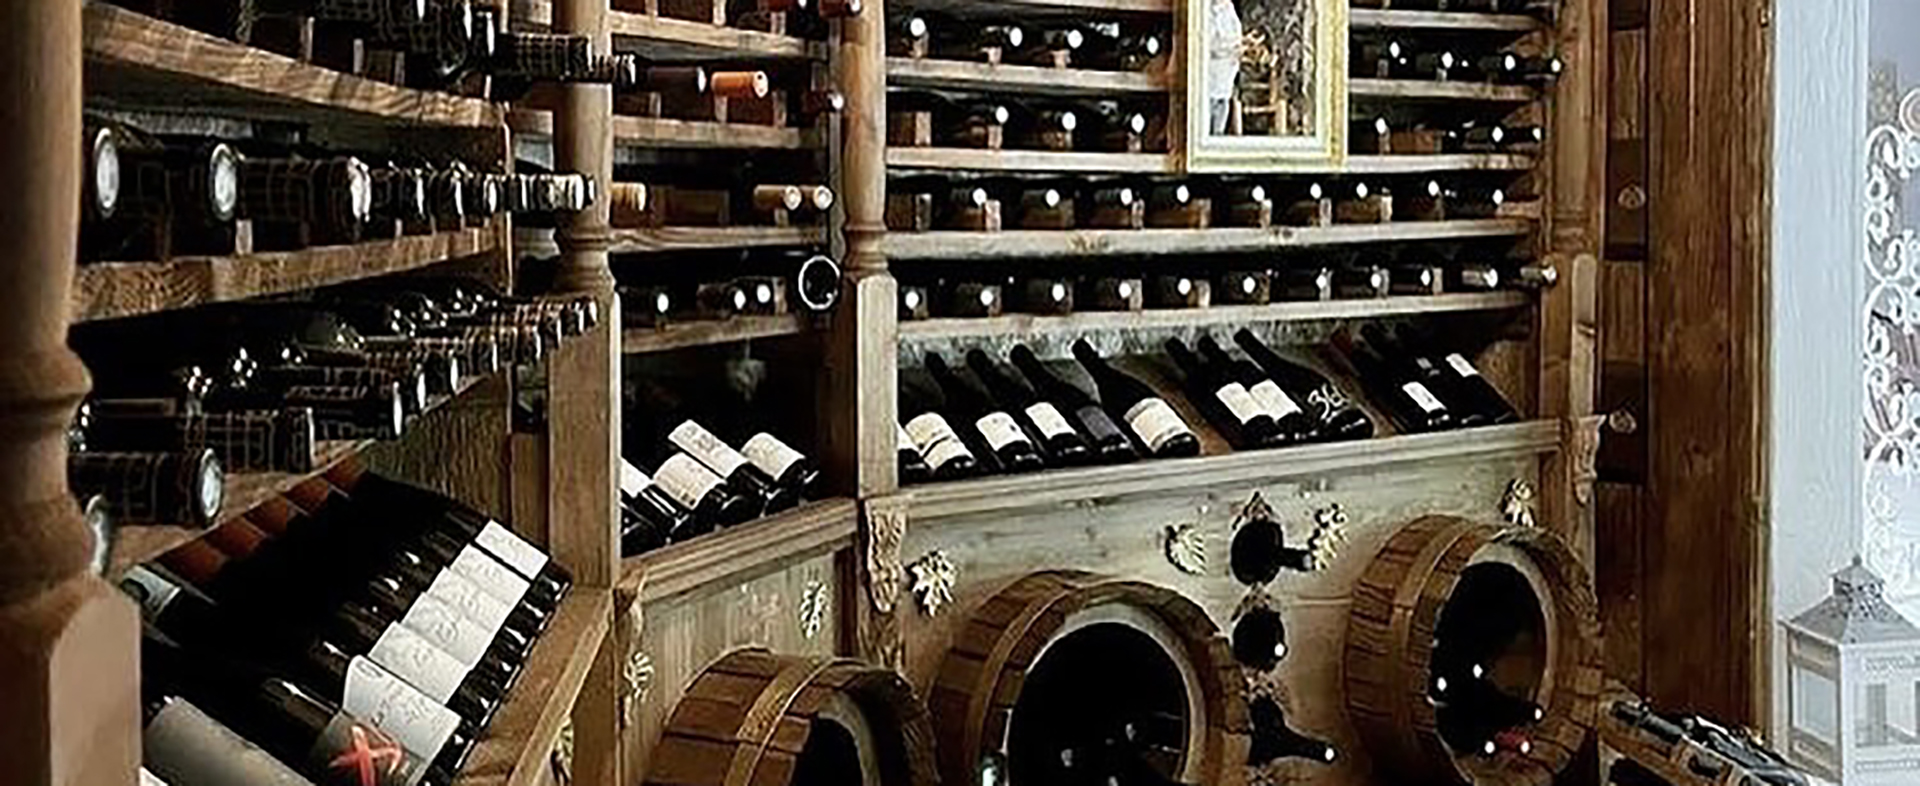 Wine cellar of the Hostellerie Saint Benoit hotel in Aniane